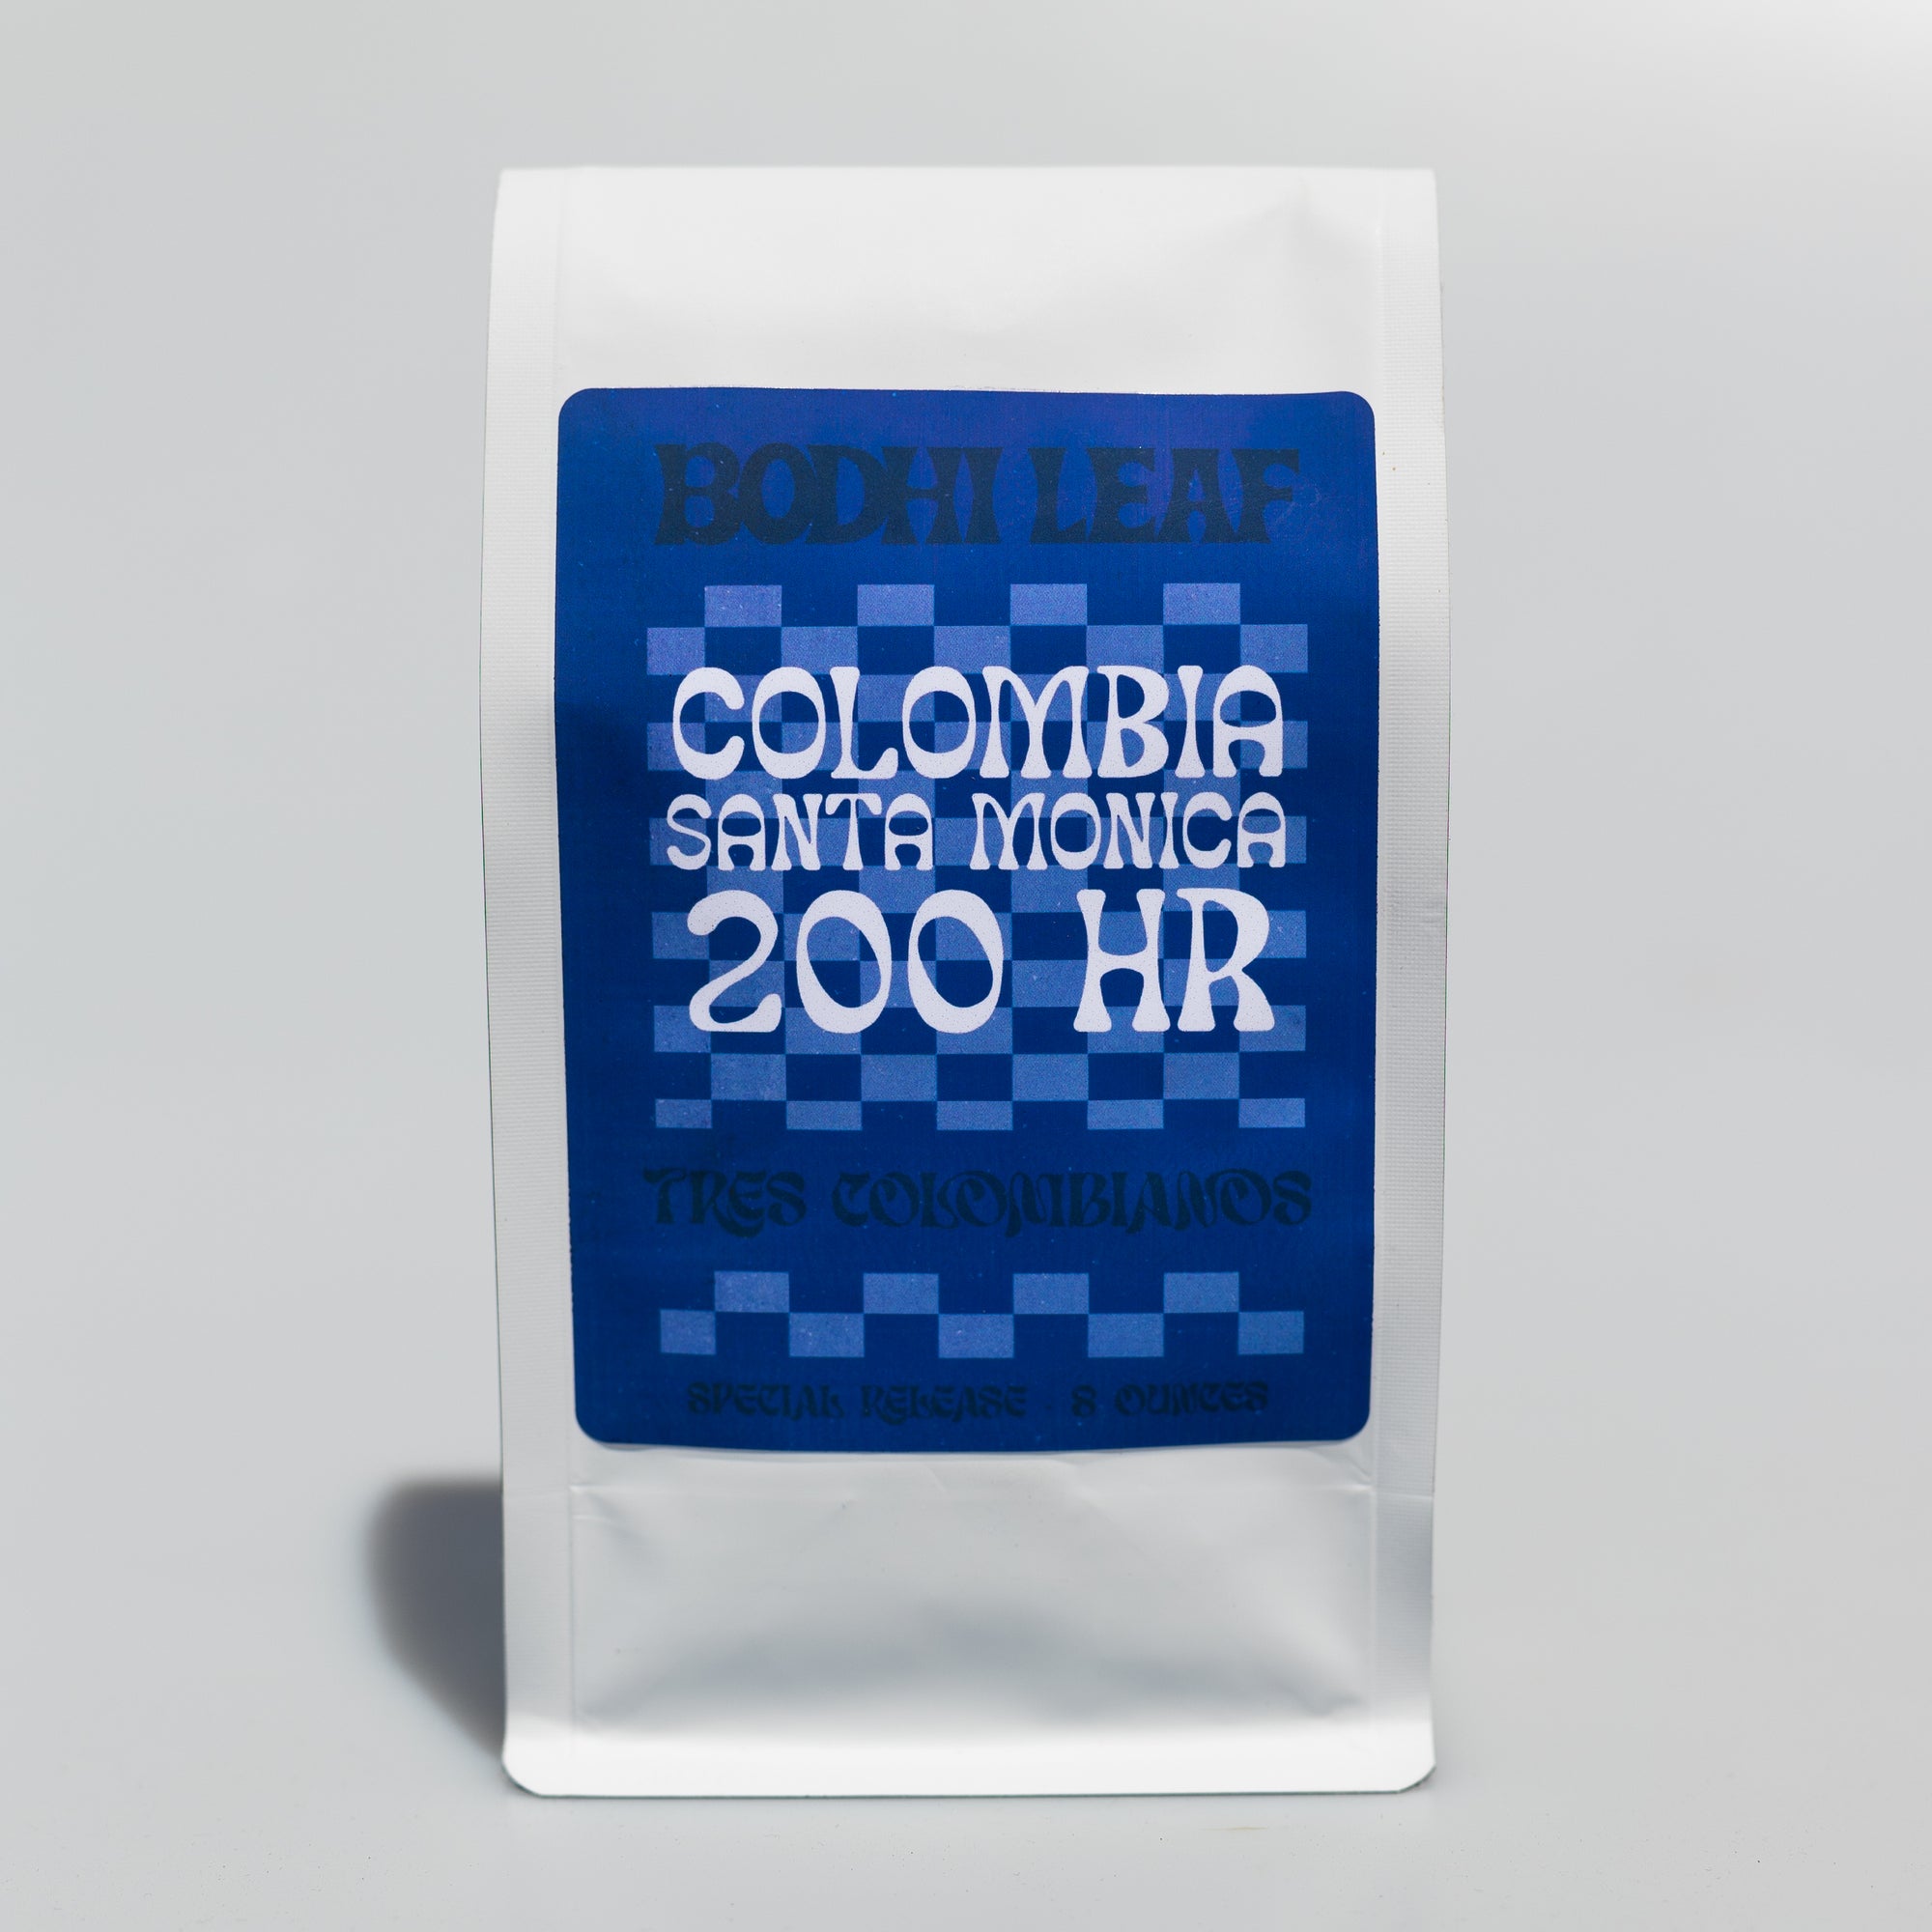 bag of Colombia Santa Monica 200 HR